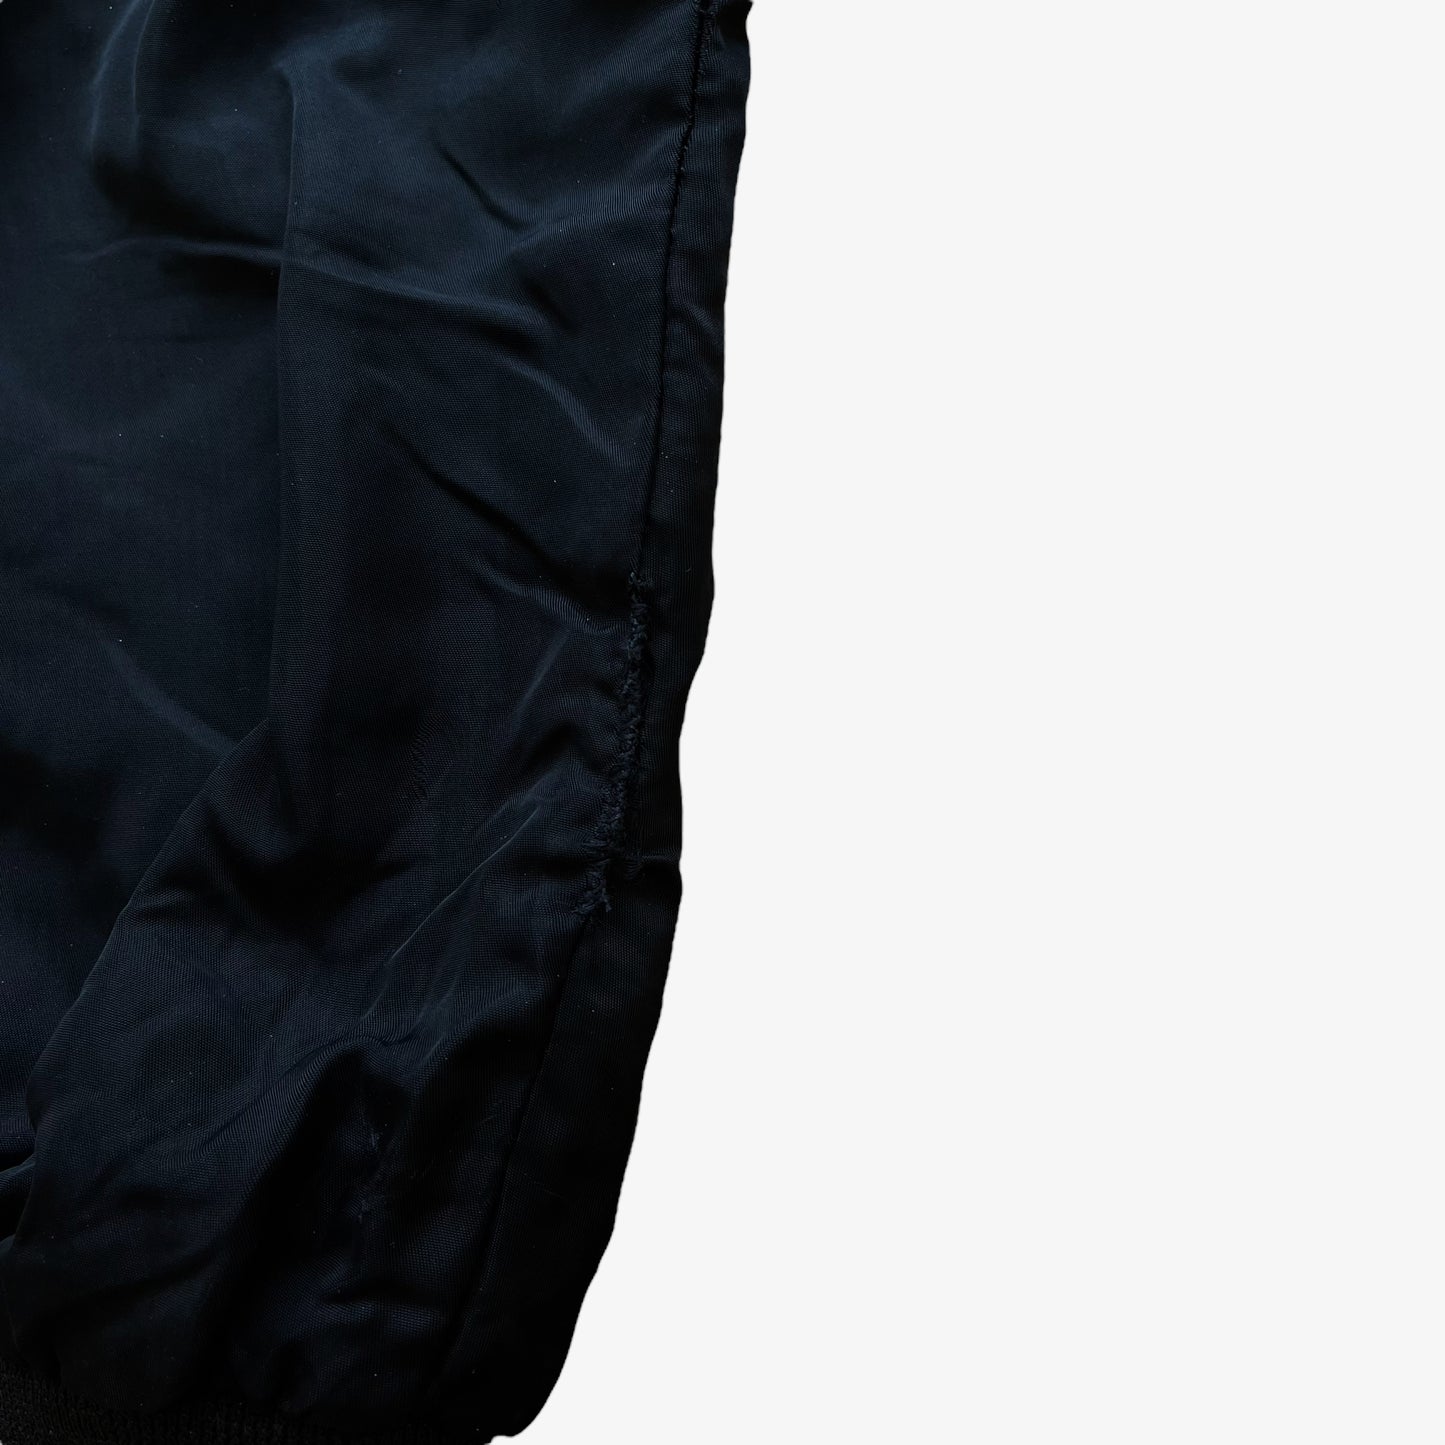 Vintage Y2K Replay Blue Jeans Black Bomber Jacket Marks - Casspio's Dream